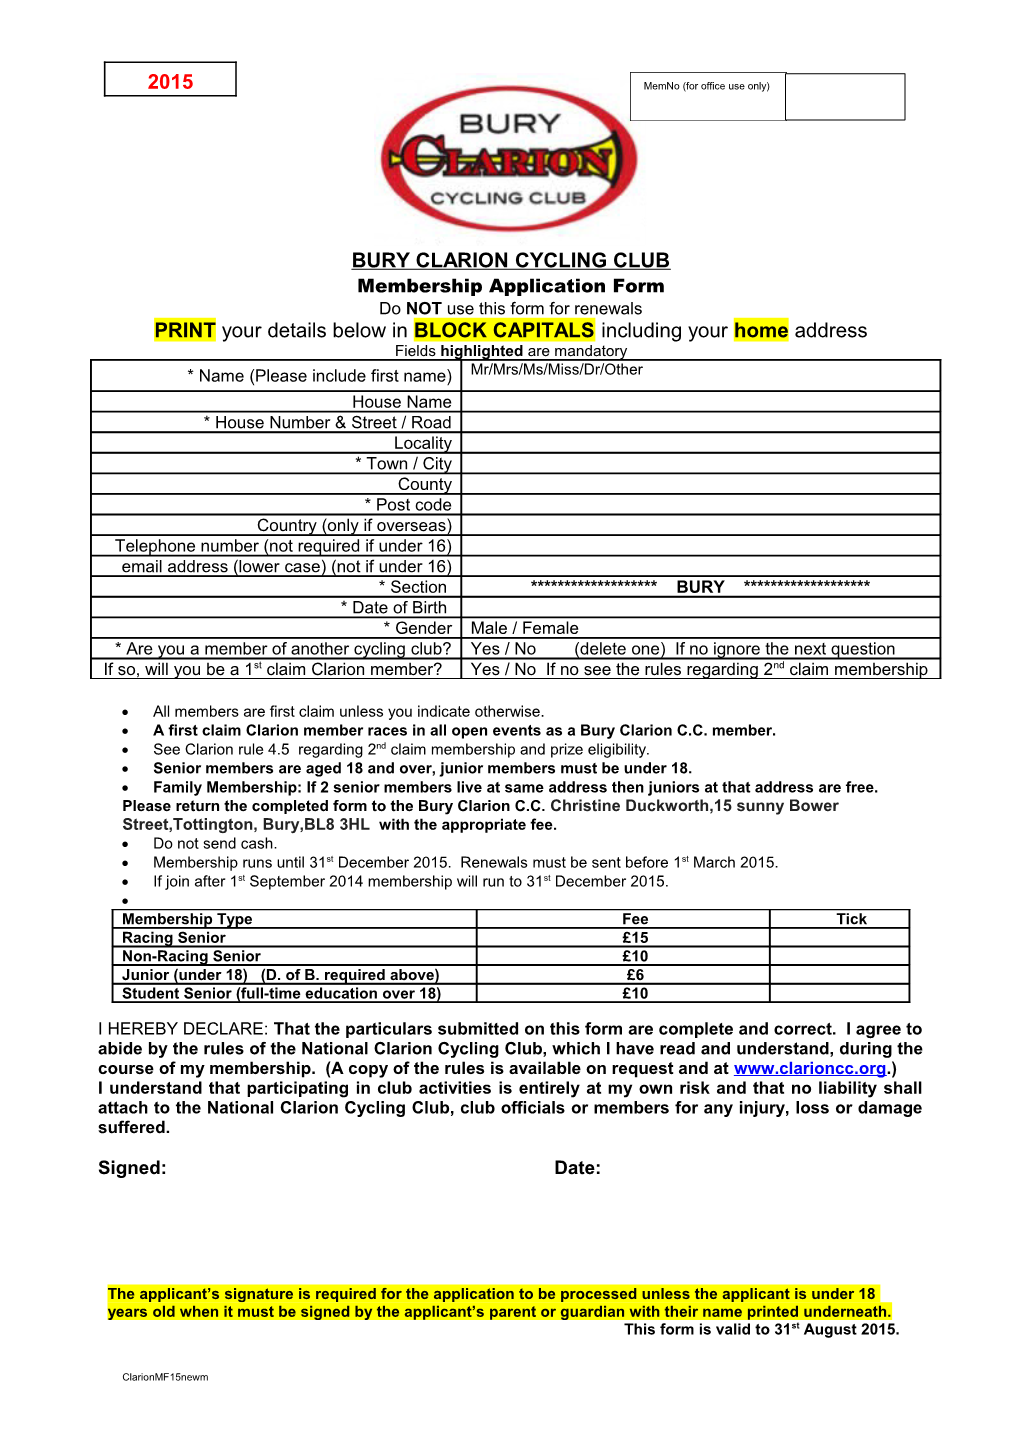 Bury Clarion CC Membership Form